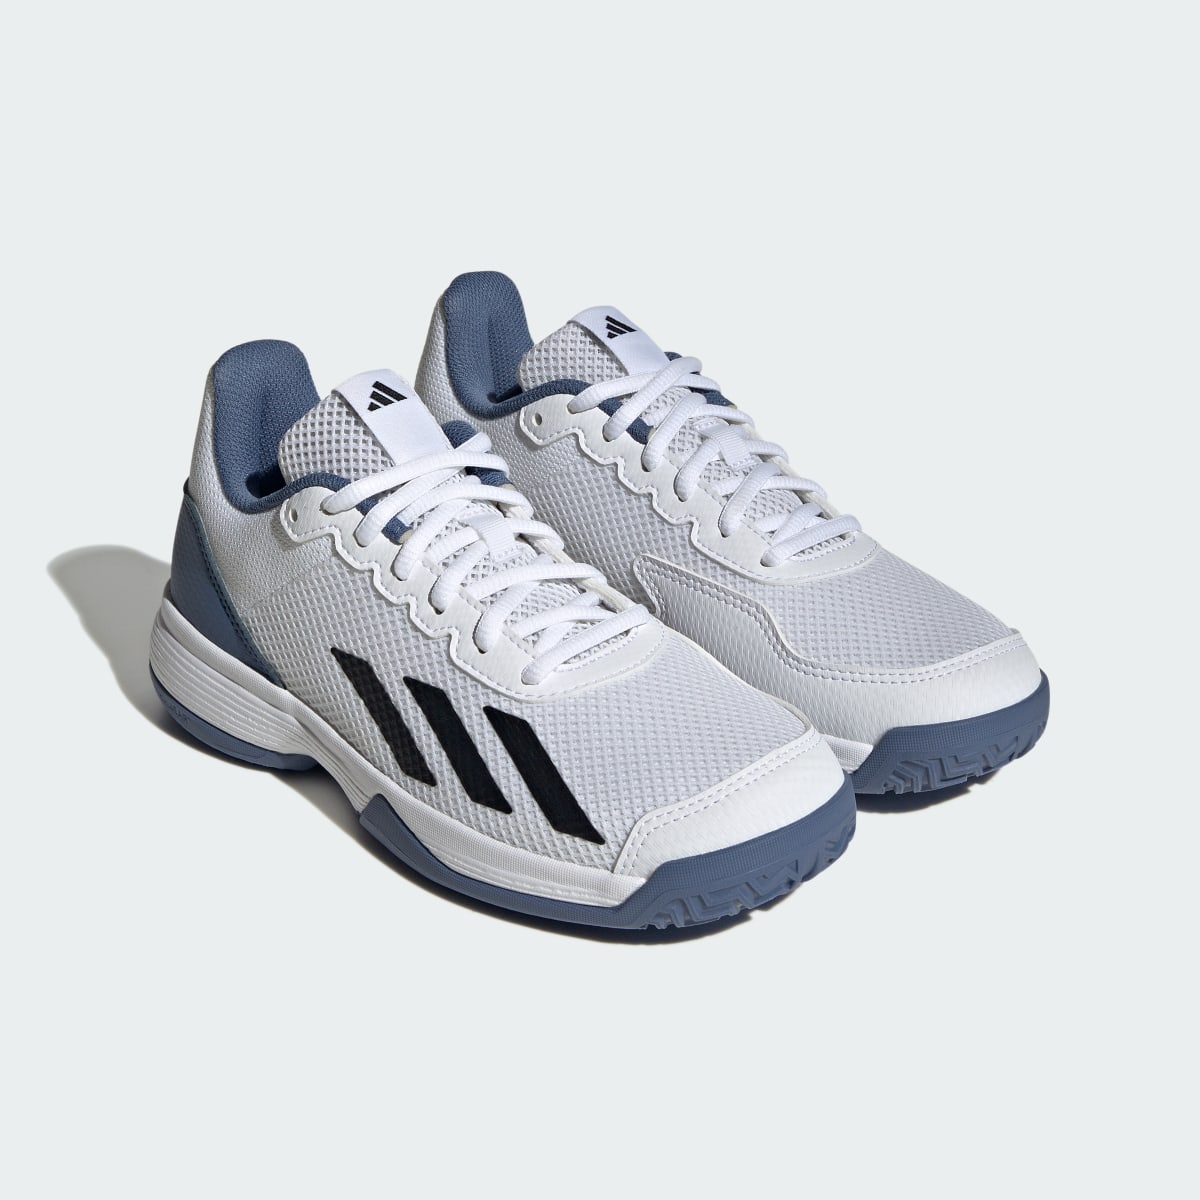 Adidas Courtflash Tennis Shoes. 5